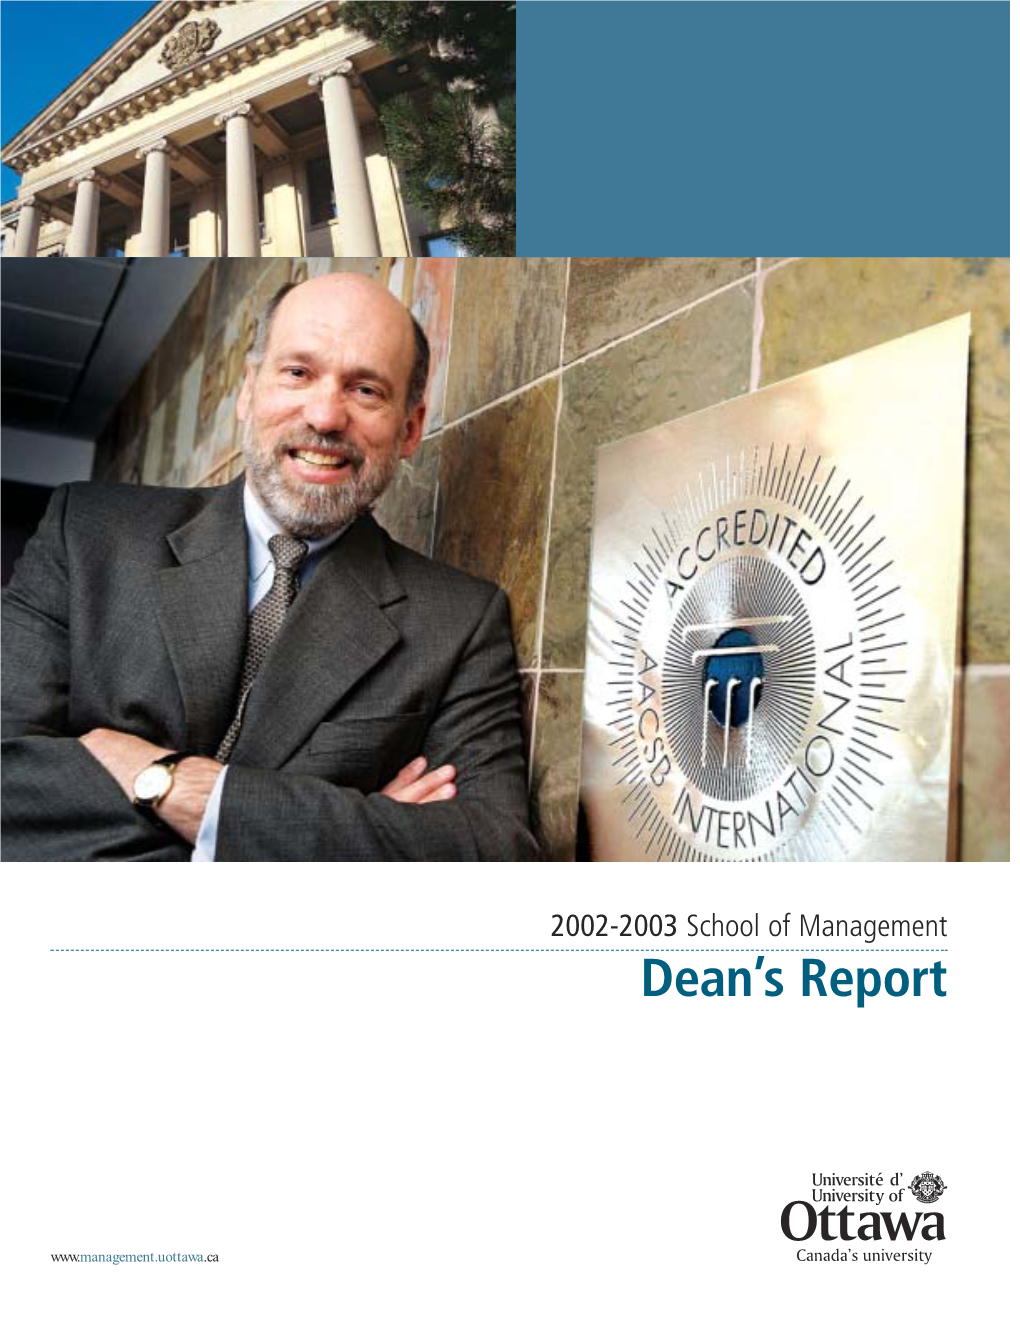 Dean's Report